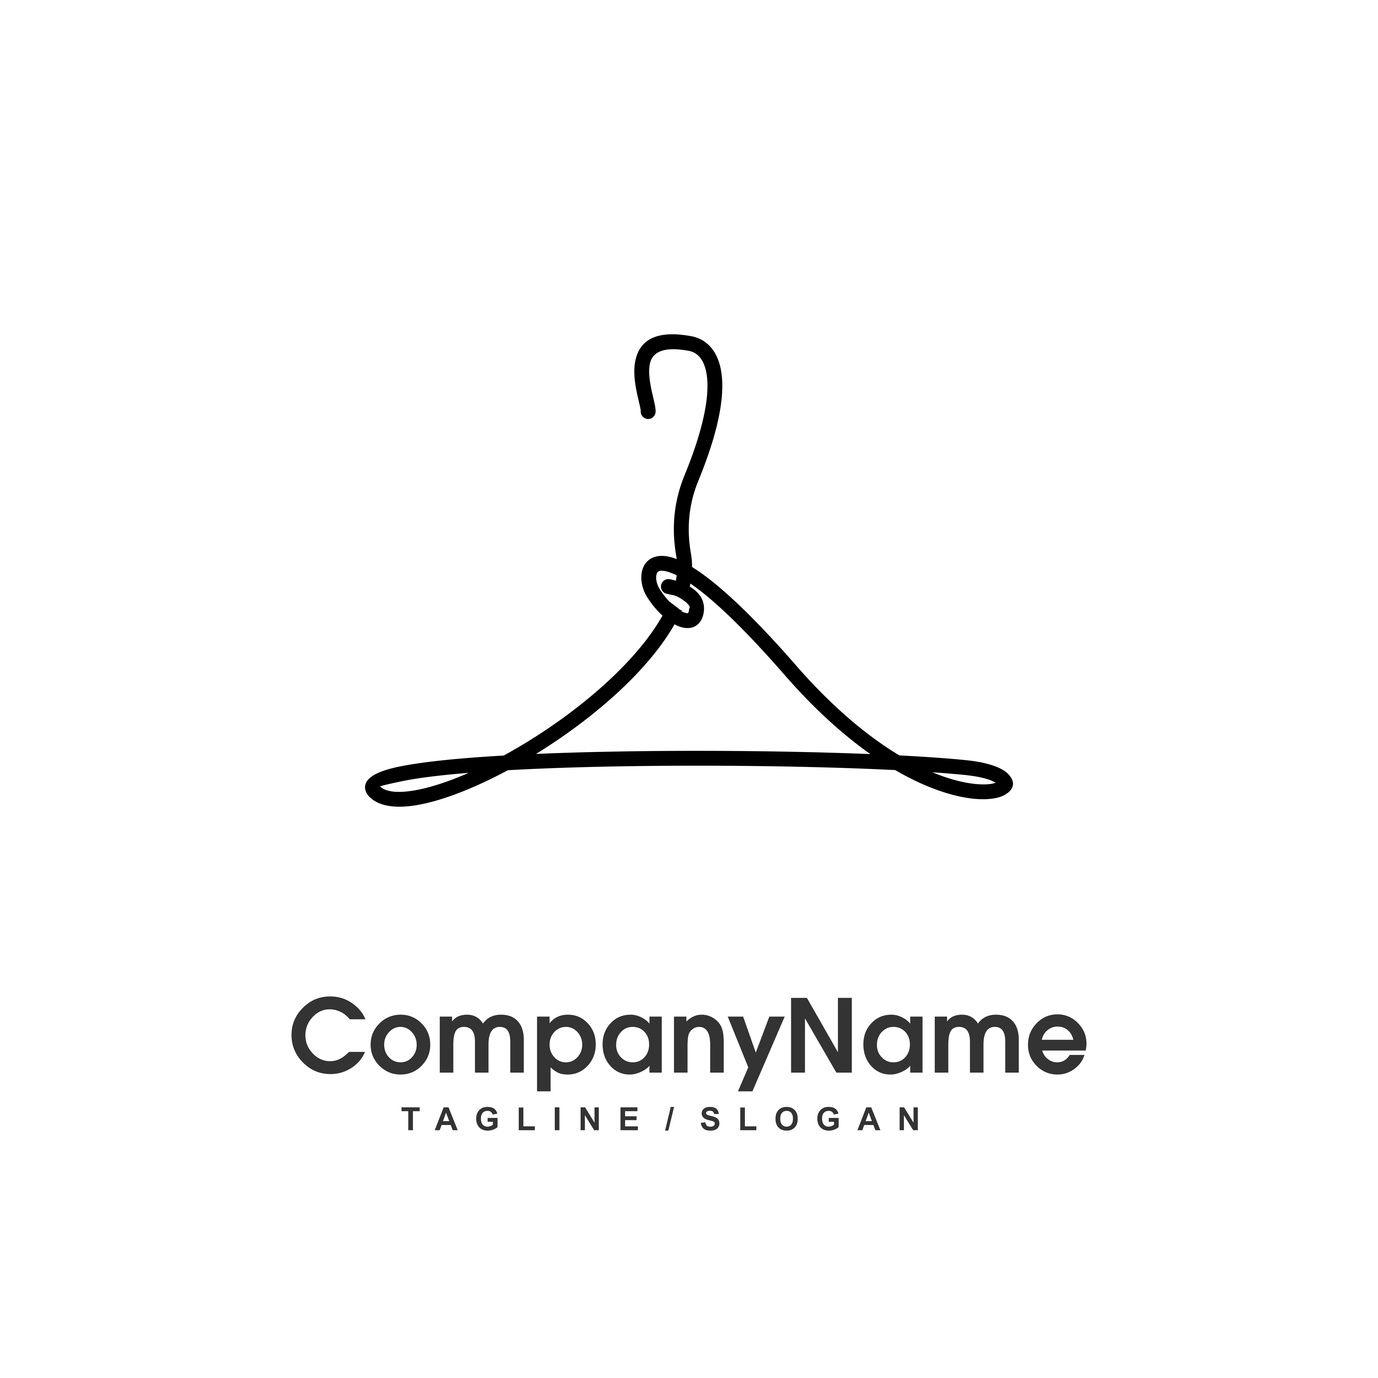 Google Fashion Logo - How to Create a Fashion Logo for Clothing Lines • Online Logo ...